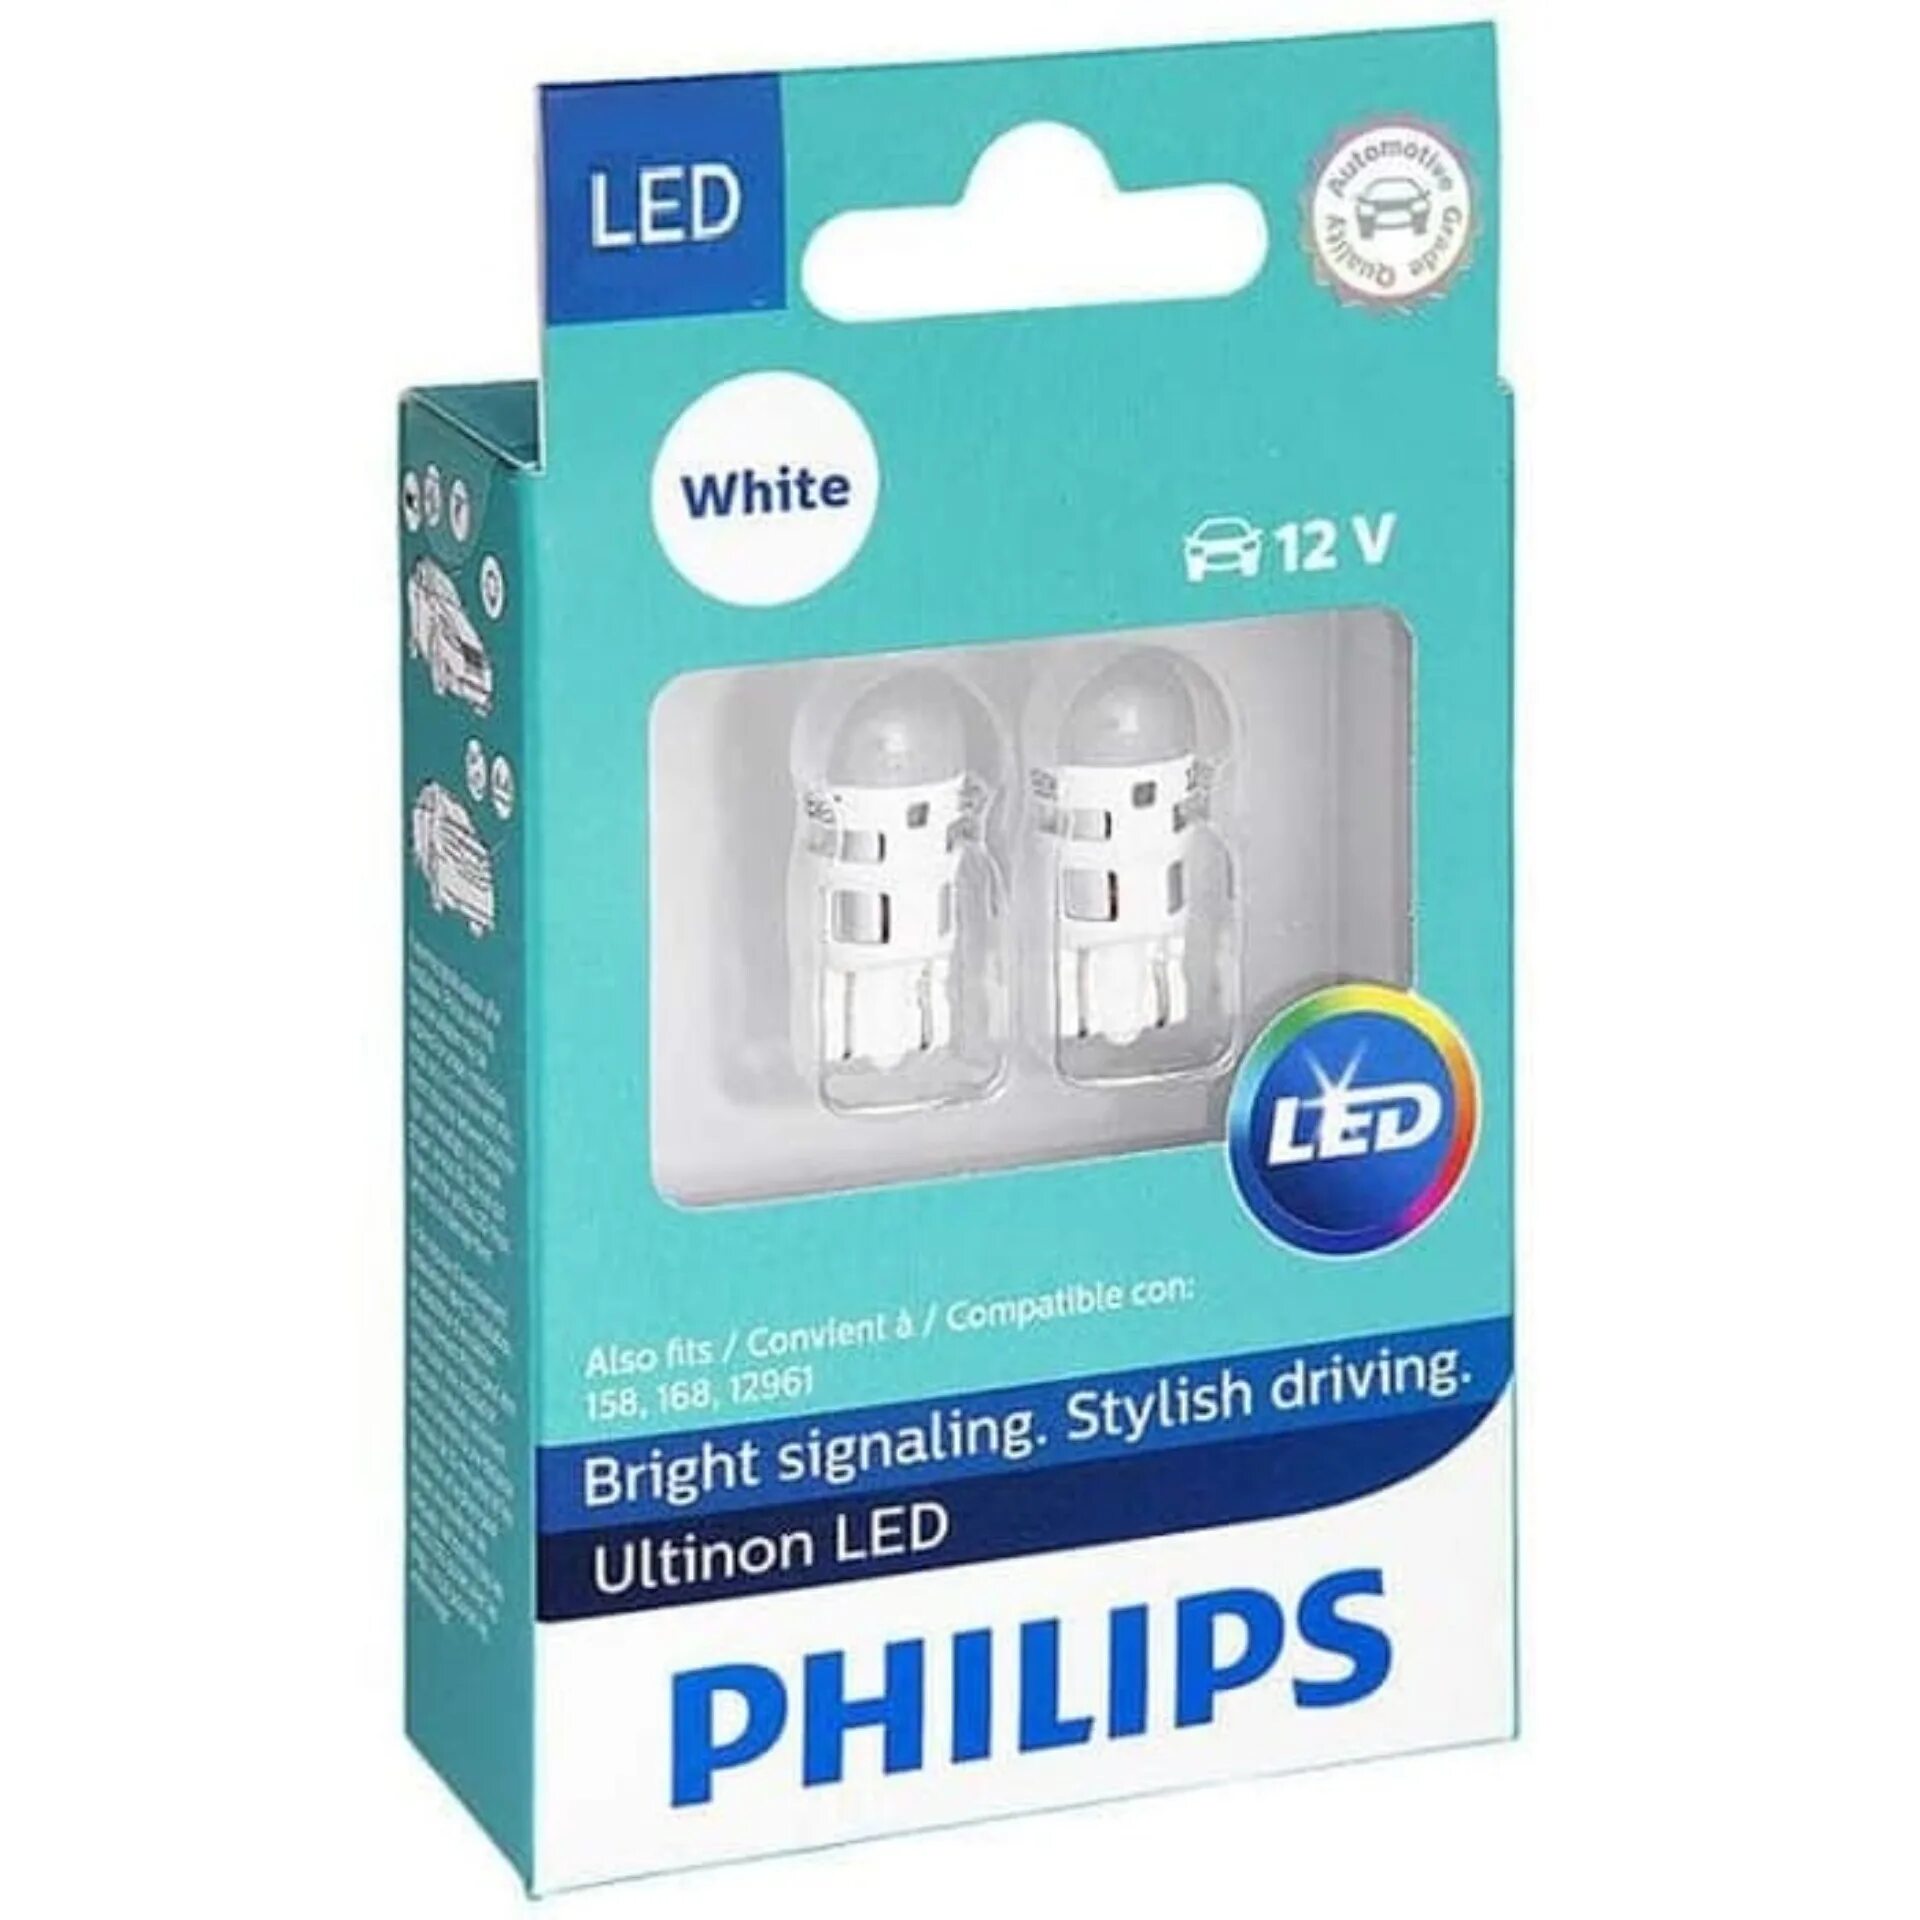 Филипс диодные. Philips w5w Ultinon led - 11961ulwx2. Philips w5w 6000k led. Philips лампа w5w светодиодная 12v t10 led 4000k. Светодиодная лампа Philips led t10 w5w 6000k Ultinon 2шт..